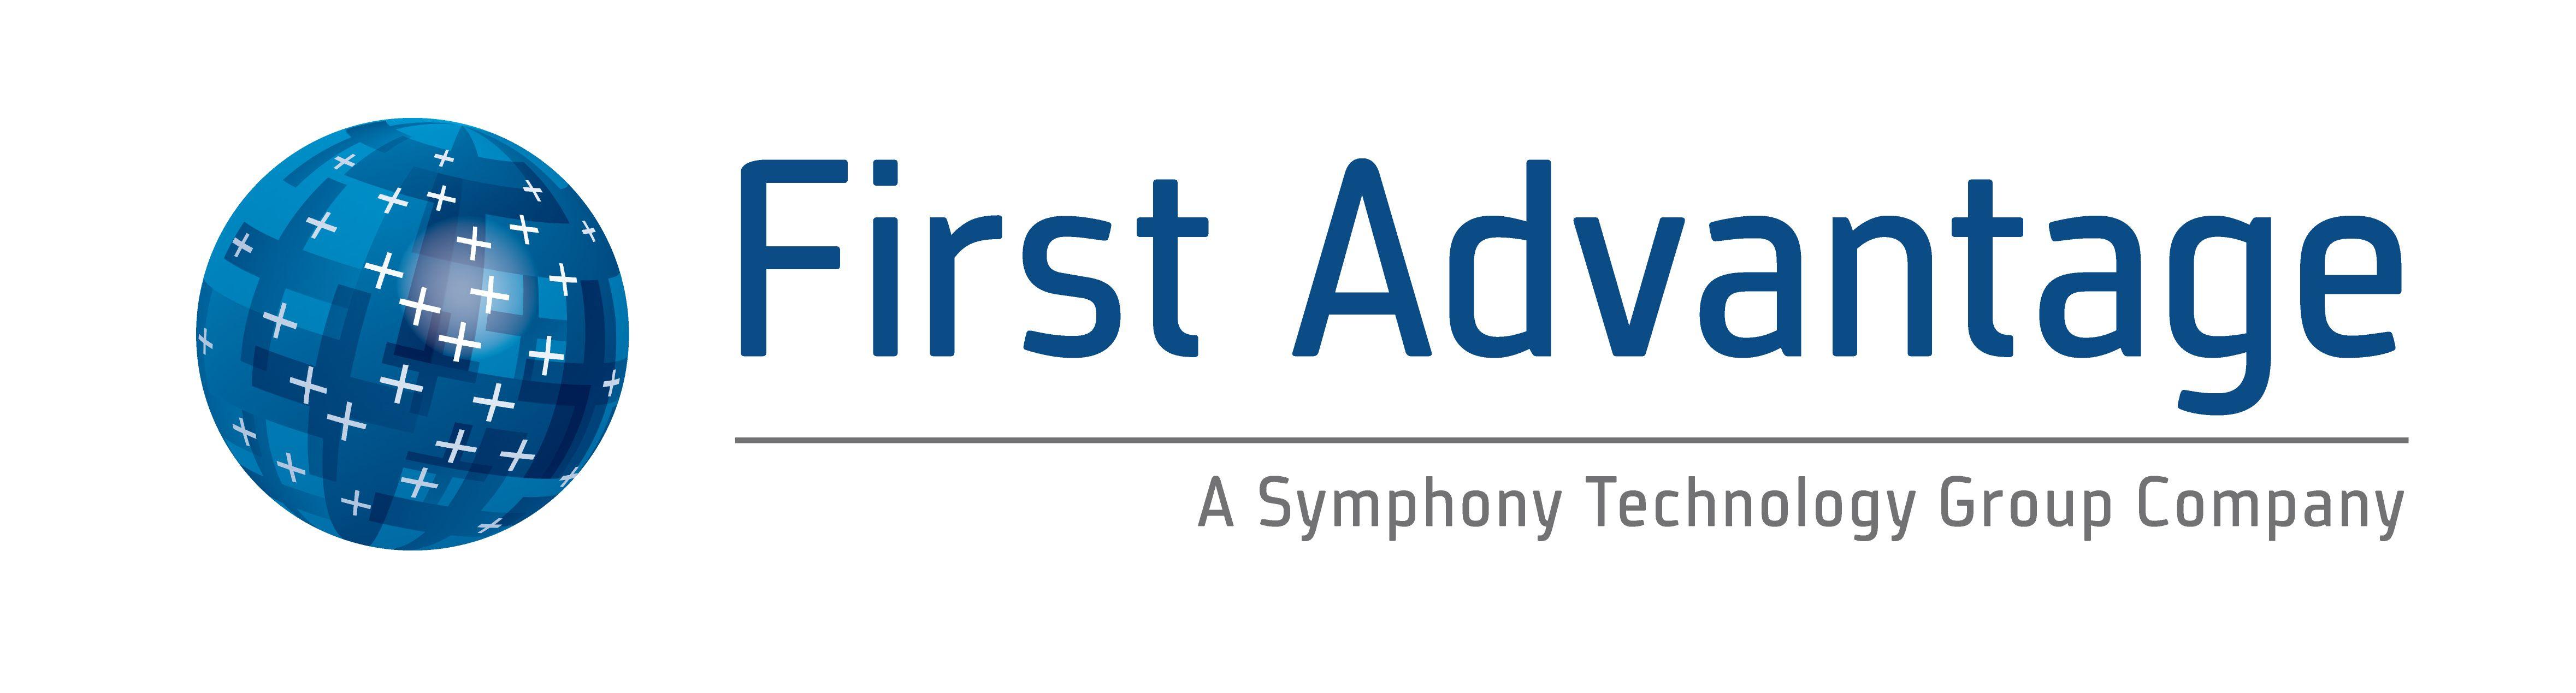 Advantage Logo - First Advantage Logo - HR ASIA